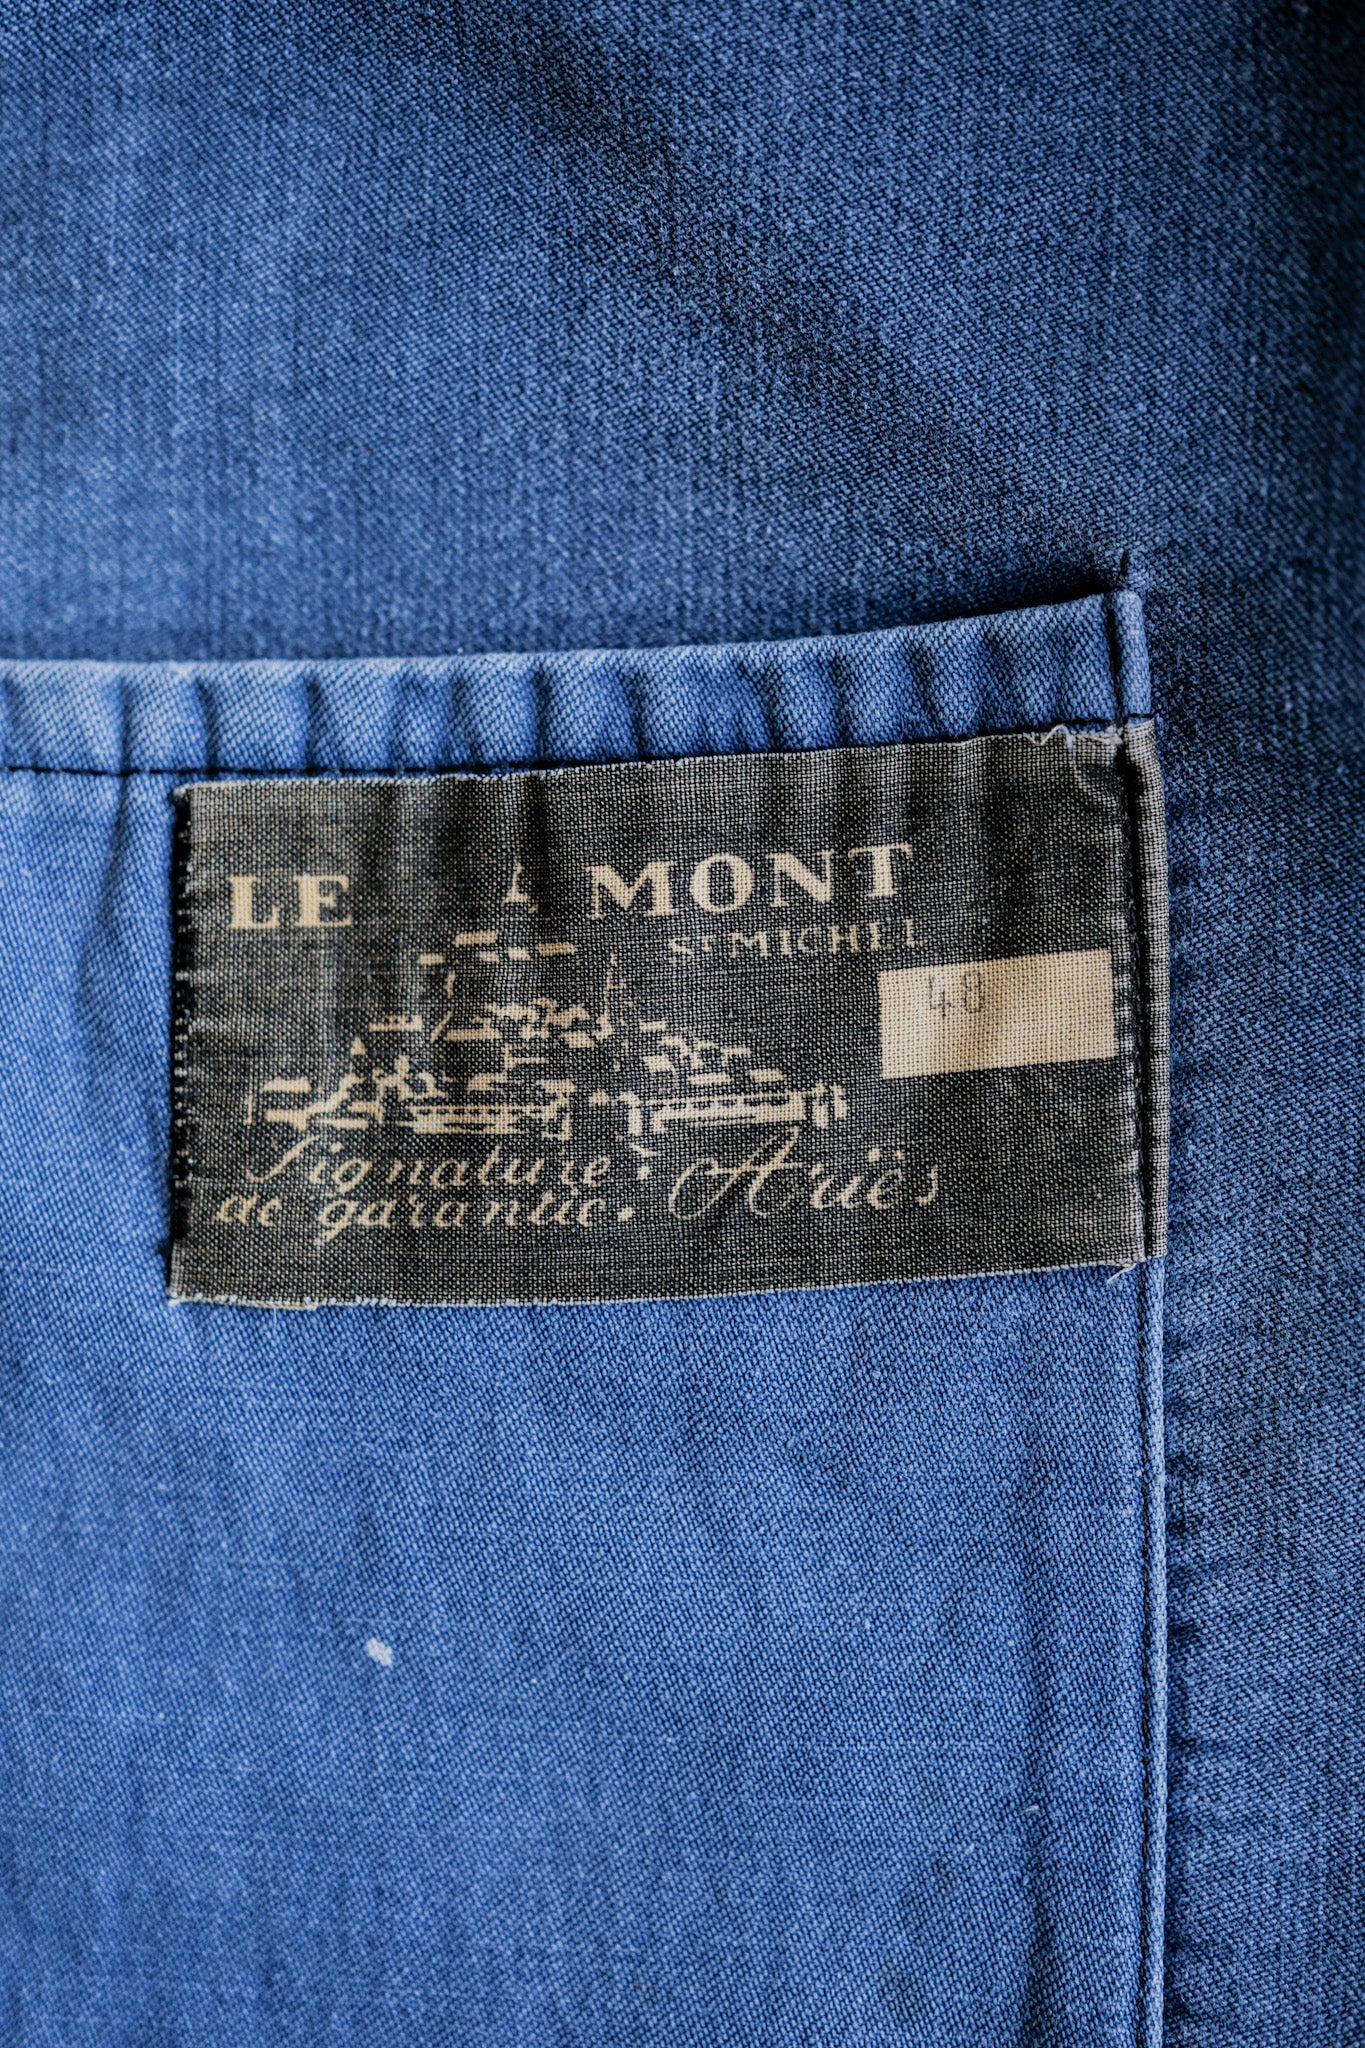 [~ 50's] แจ็คเก็ตตัวตุ่นสีน้ำเงินโบราณฝรั่งเศสขนาด 48 "Le Mont St. Michel"